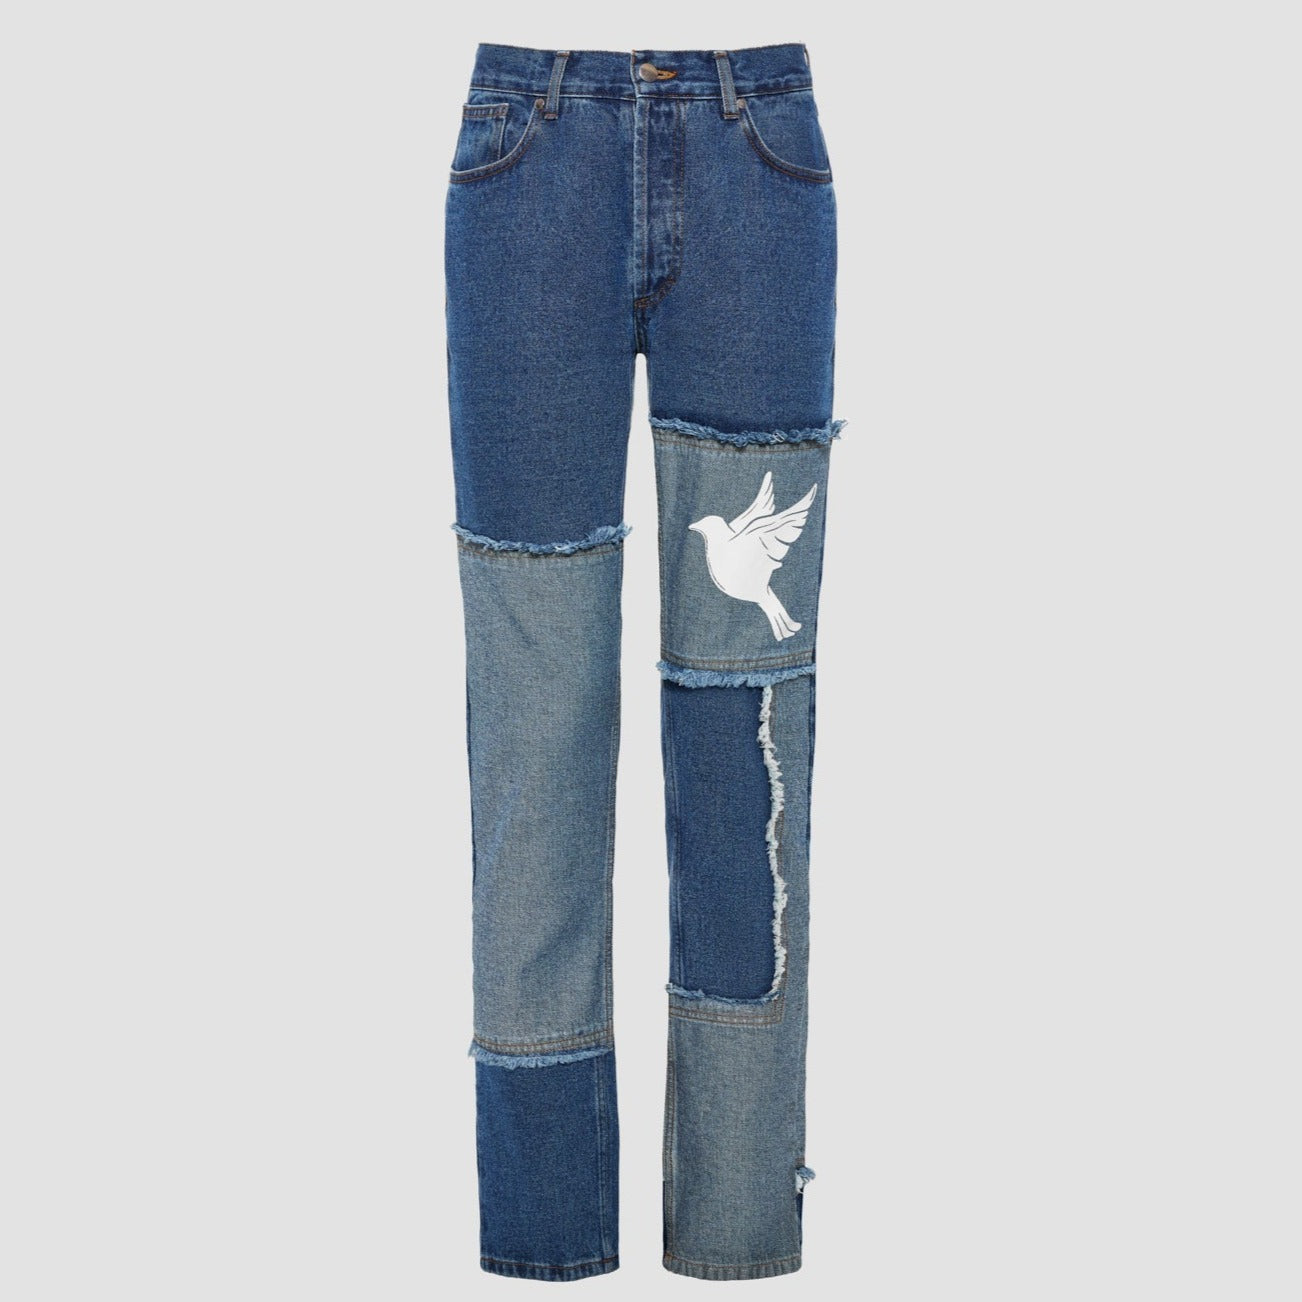 TPL ® Patchwork Denim Jeans - The Proper Label ™